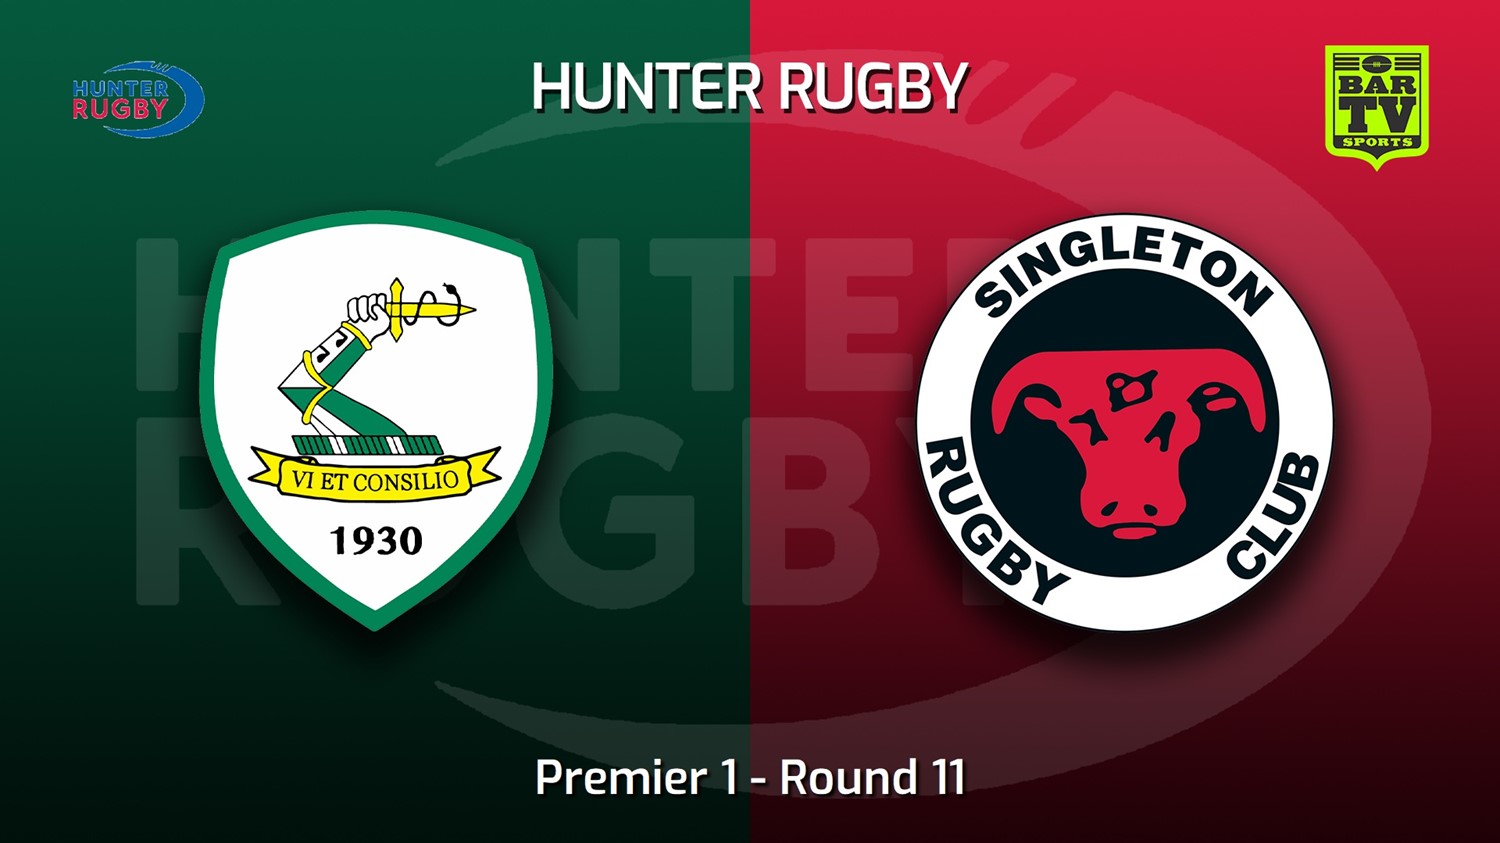 220709-Hunter Rugby Round 11 - Premier 1 - Merewether Carlton v Singleton Bulls Slate Image